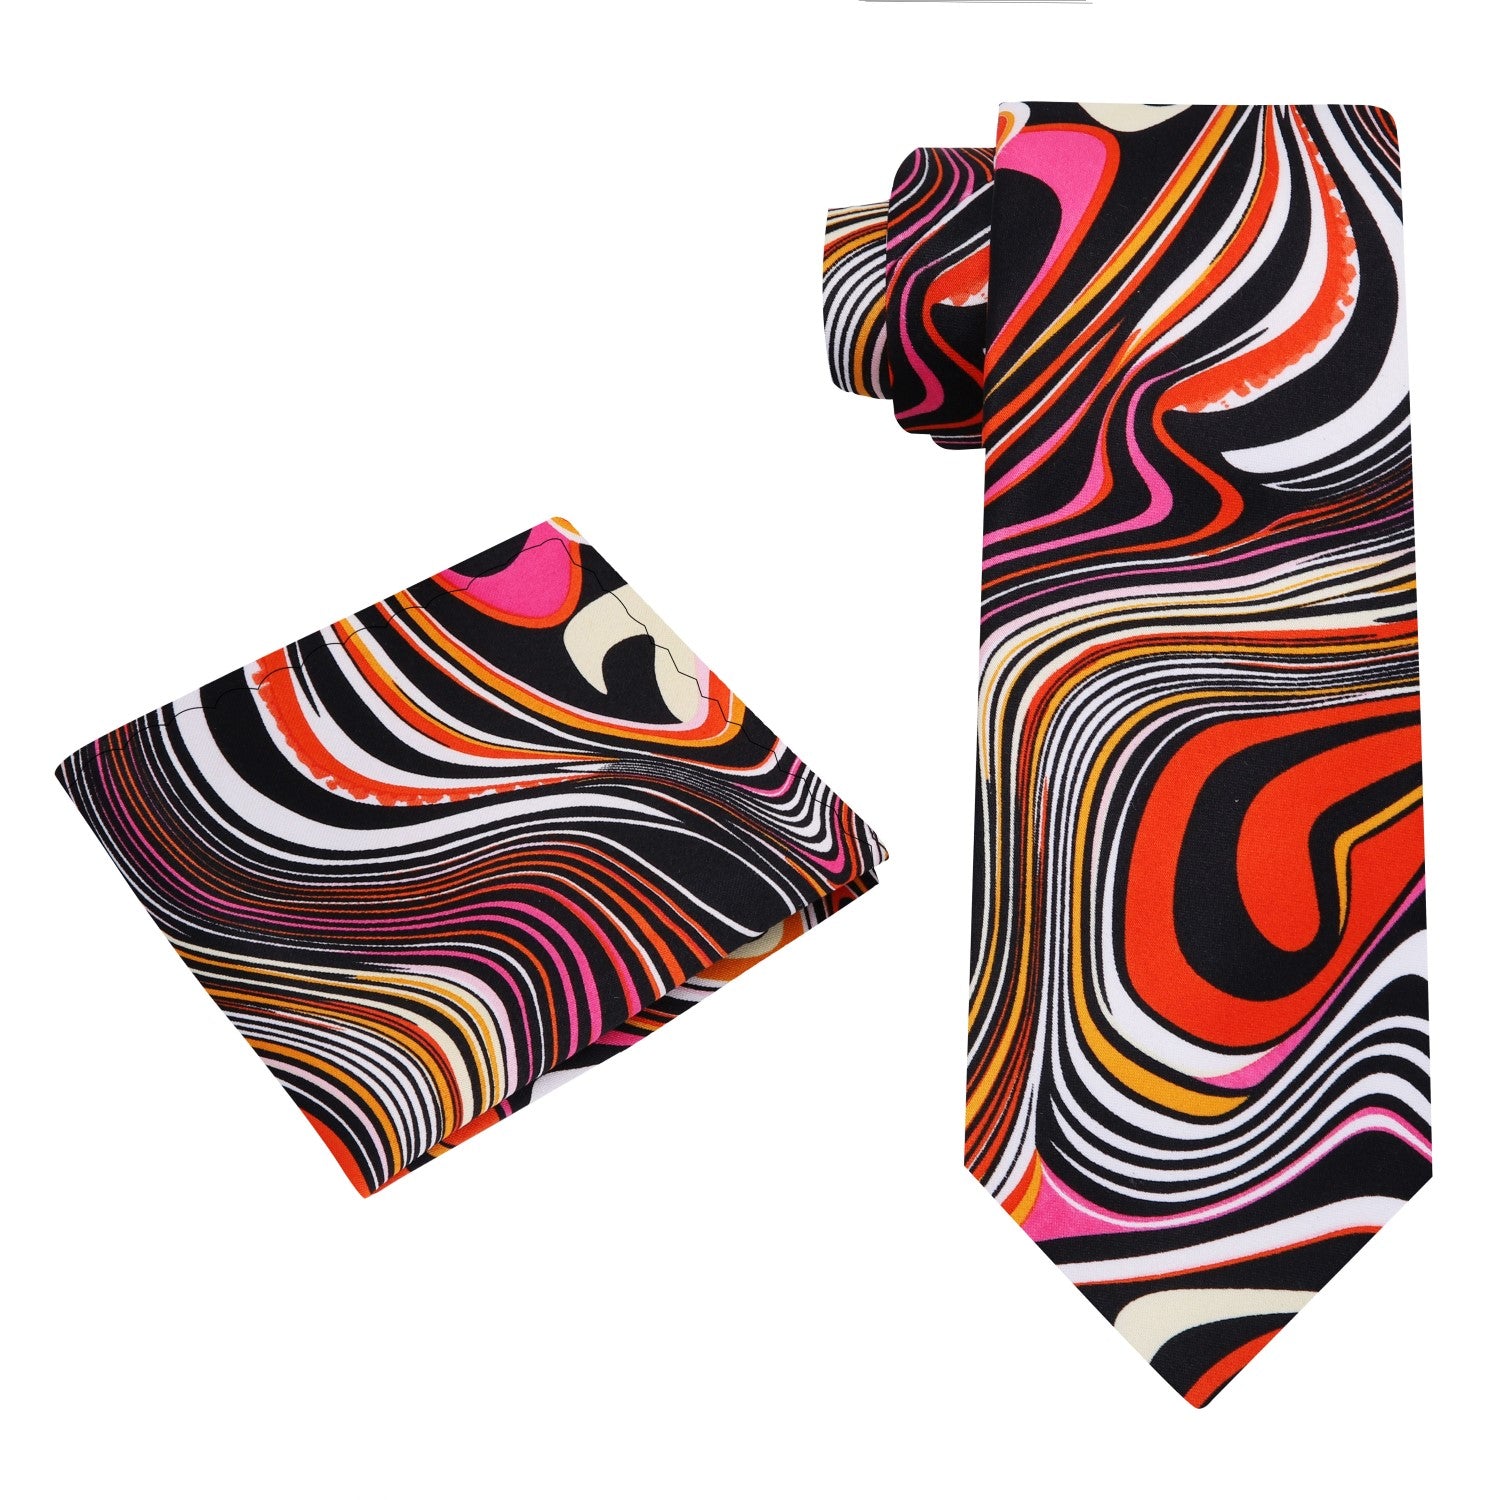 Alt View: Black, Orange, Pink Abstract Tie and Pocket